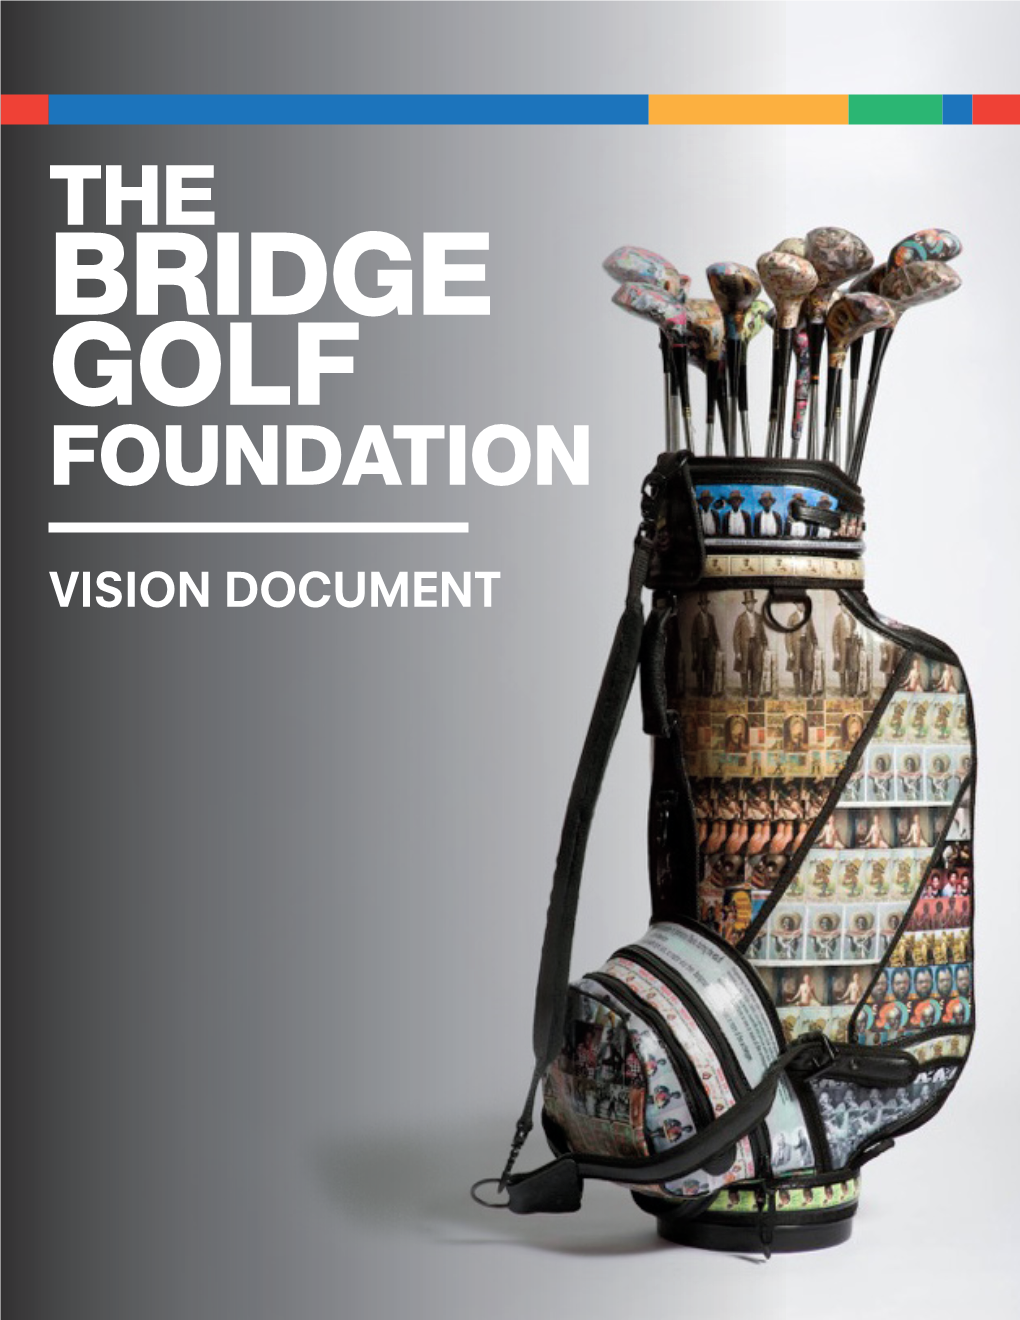 The Bridge Golf Foundation